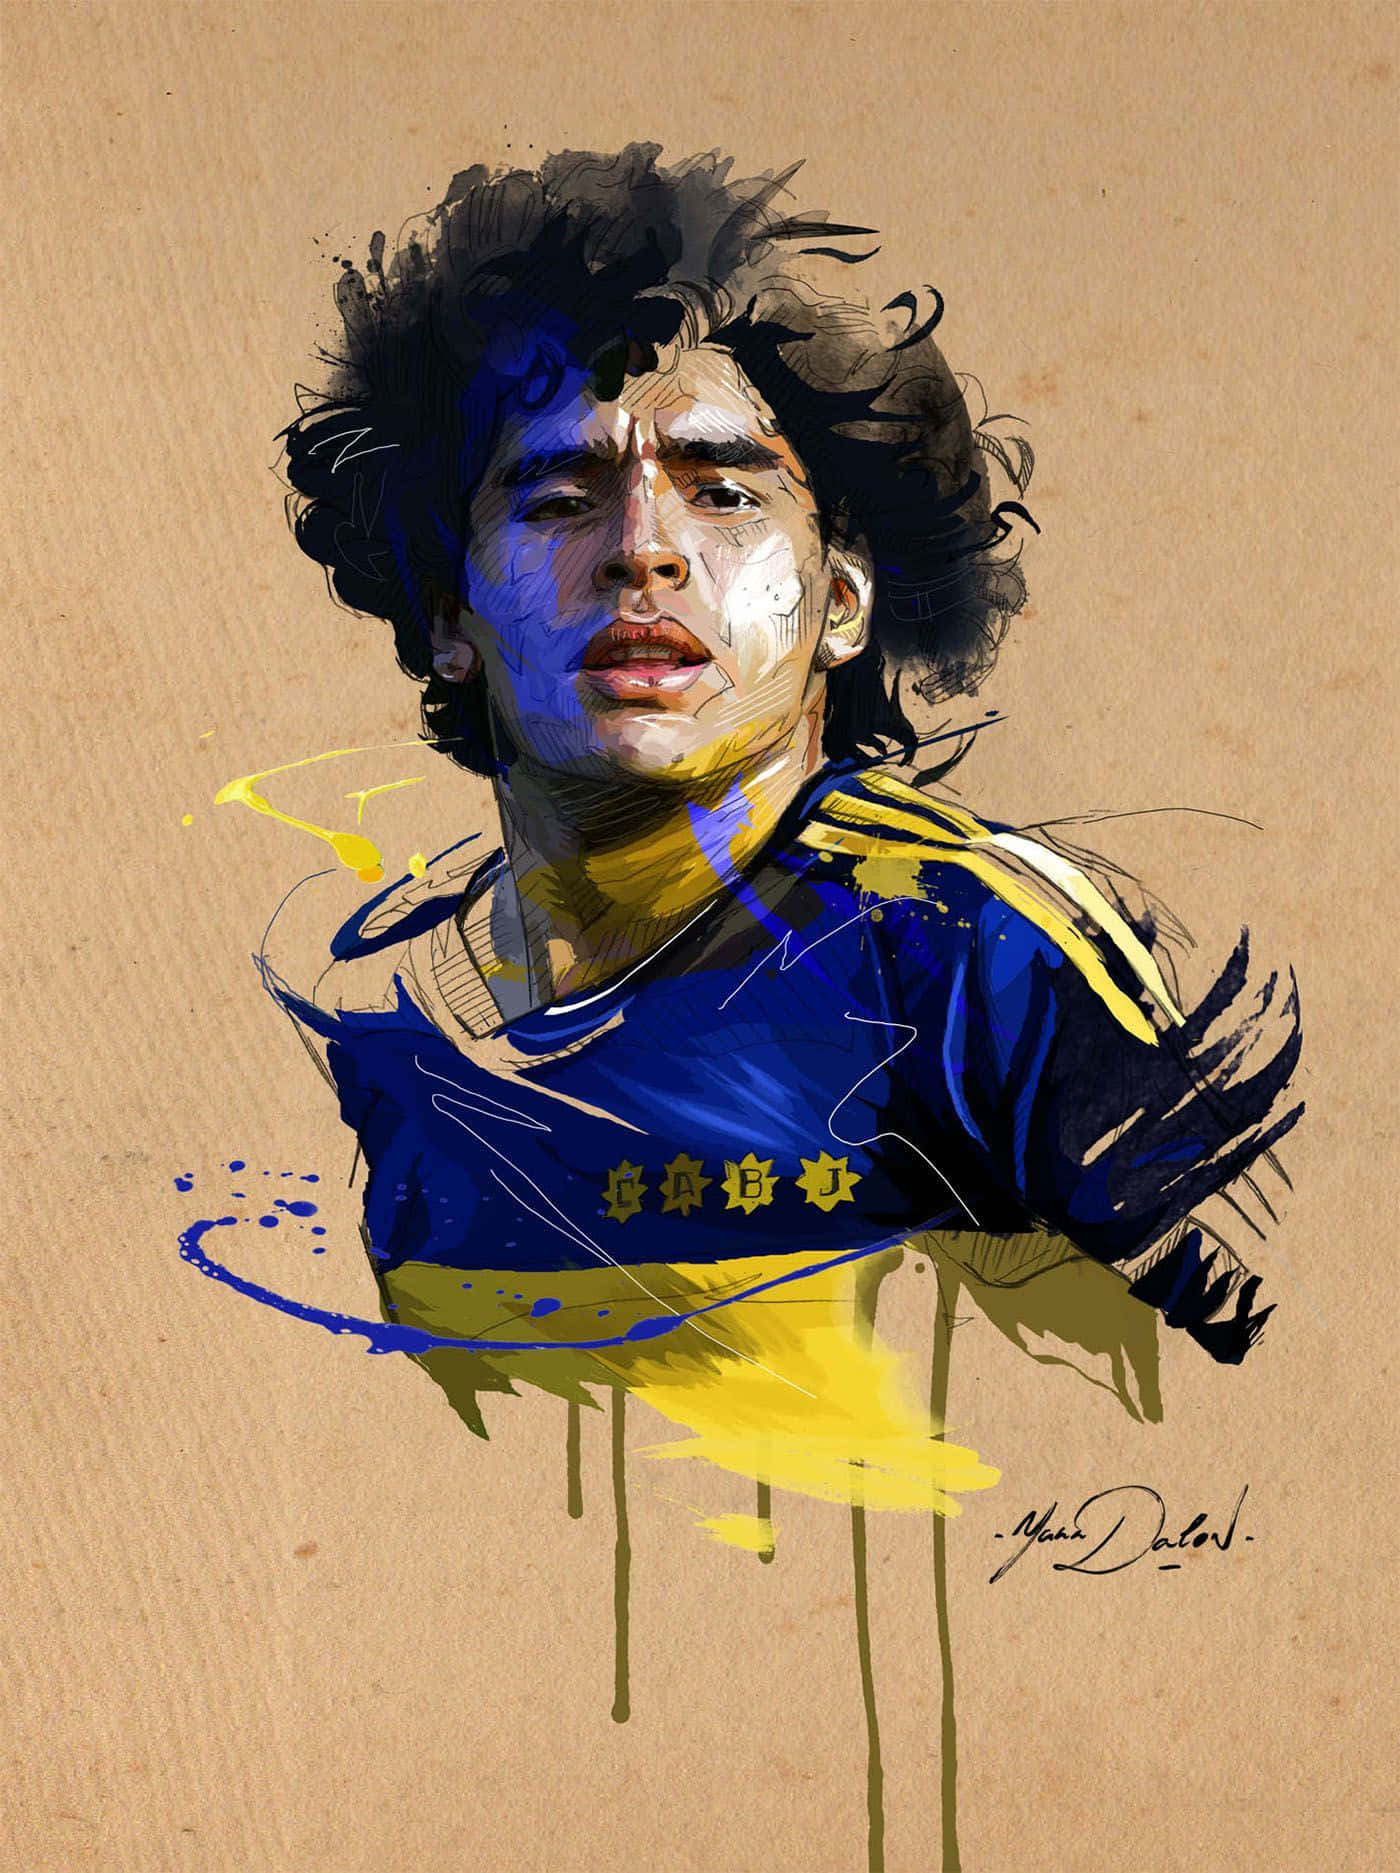 Diego Maradona Football Player Illustration Art Wallpaper